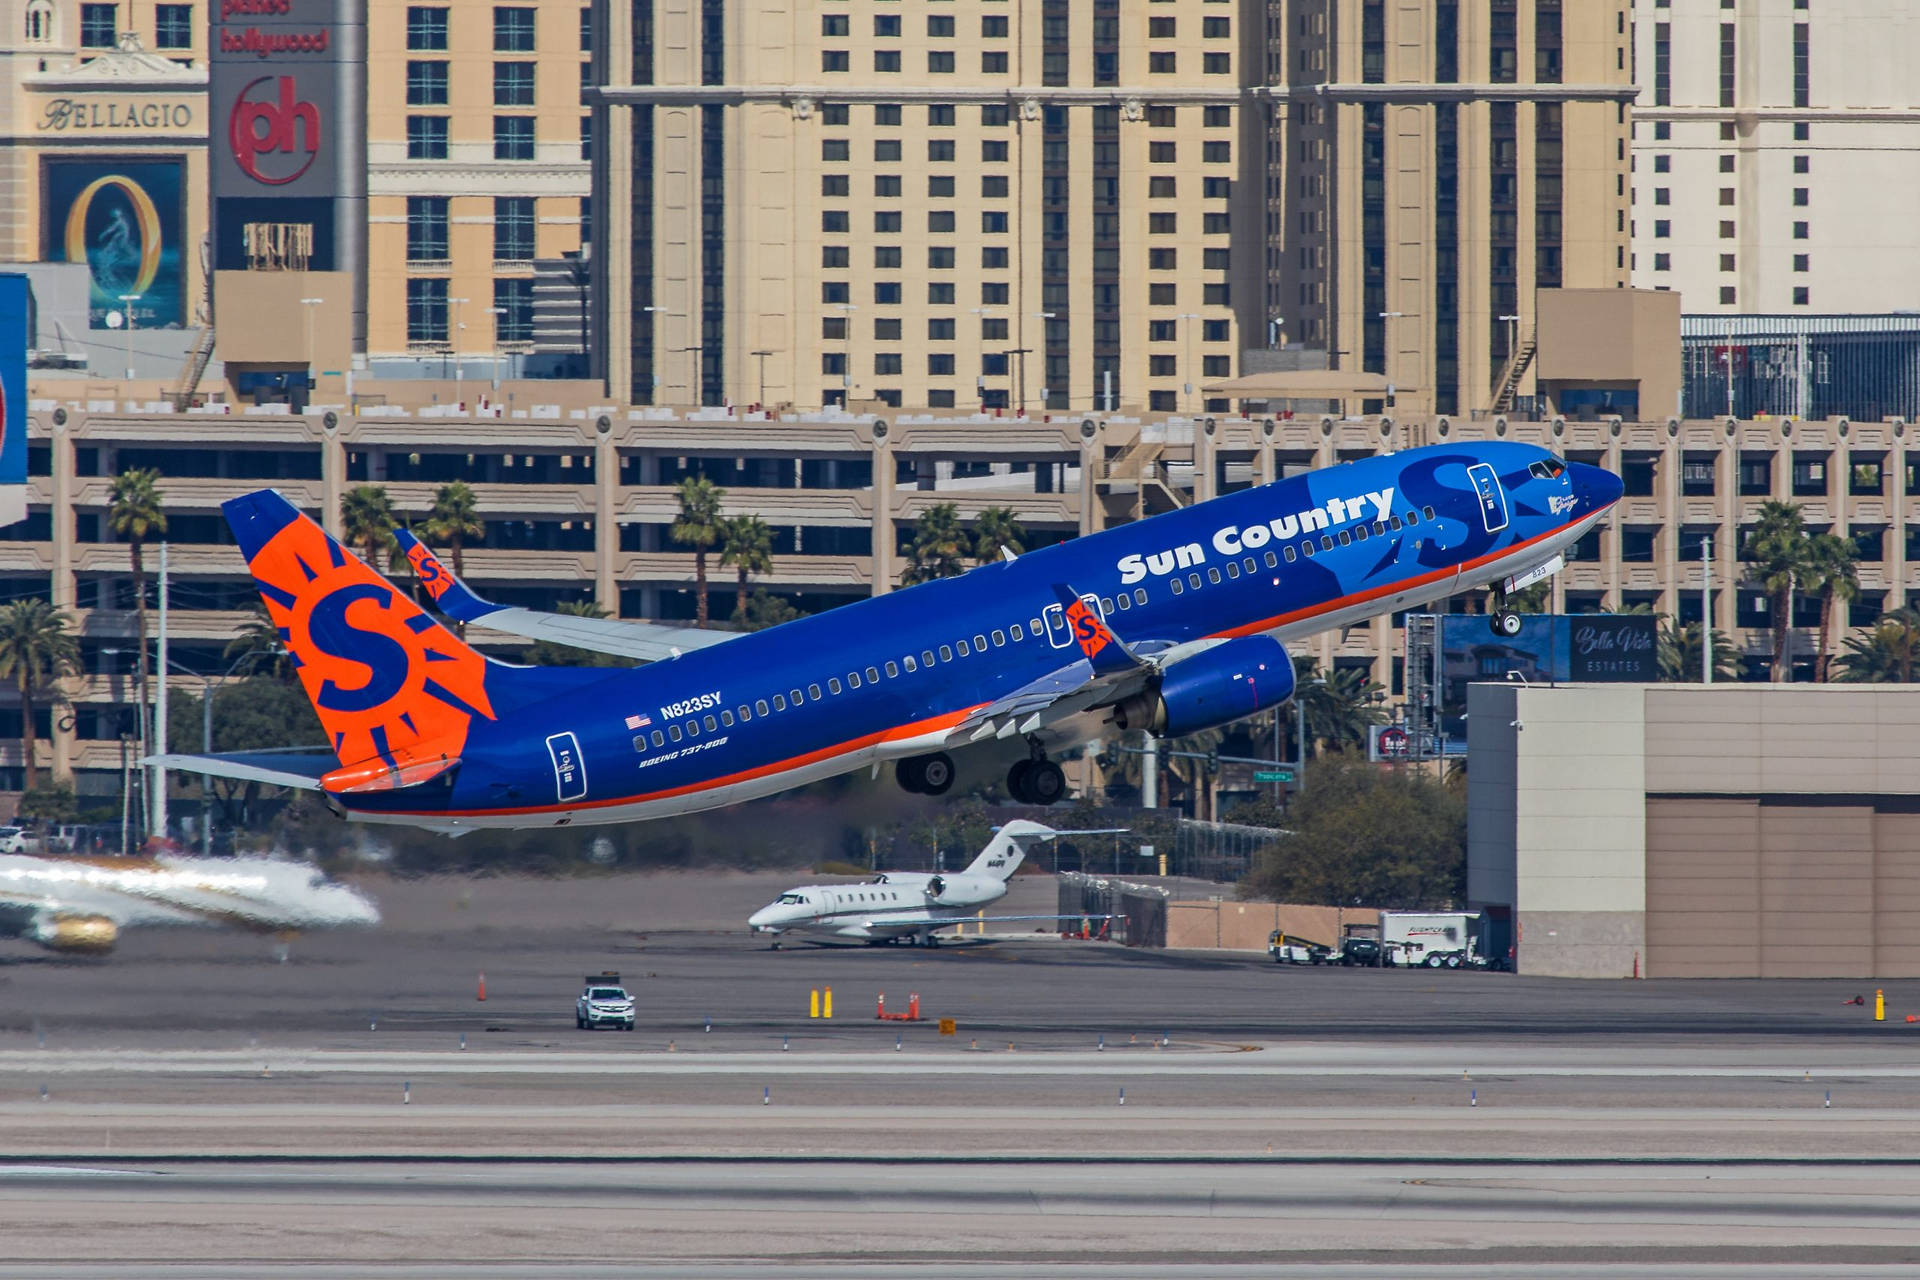 Suncountry Flugzeug Hebt In Las Vegas Ab Wallpaper